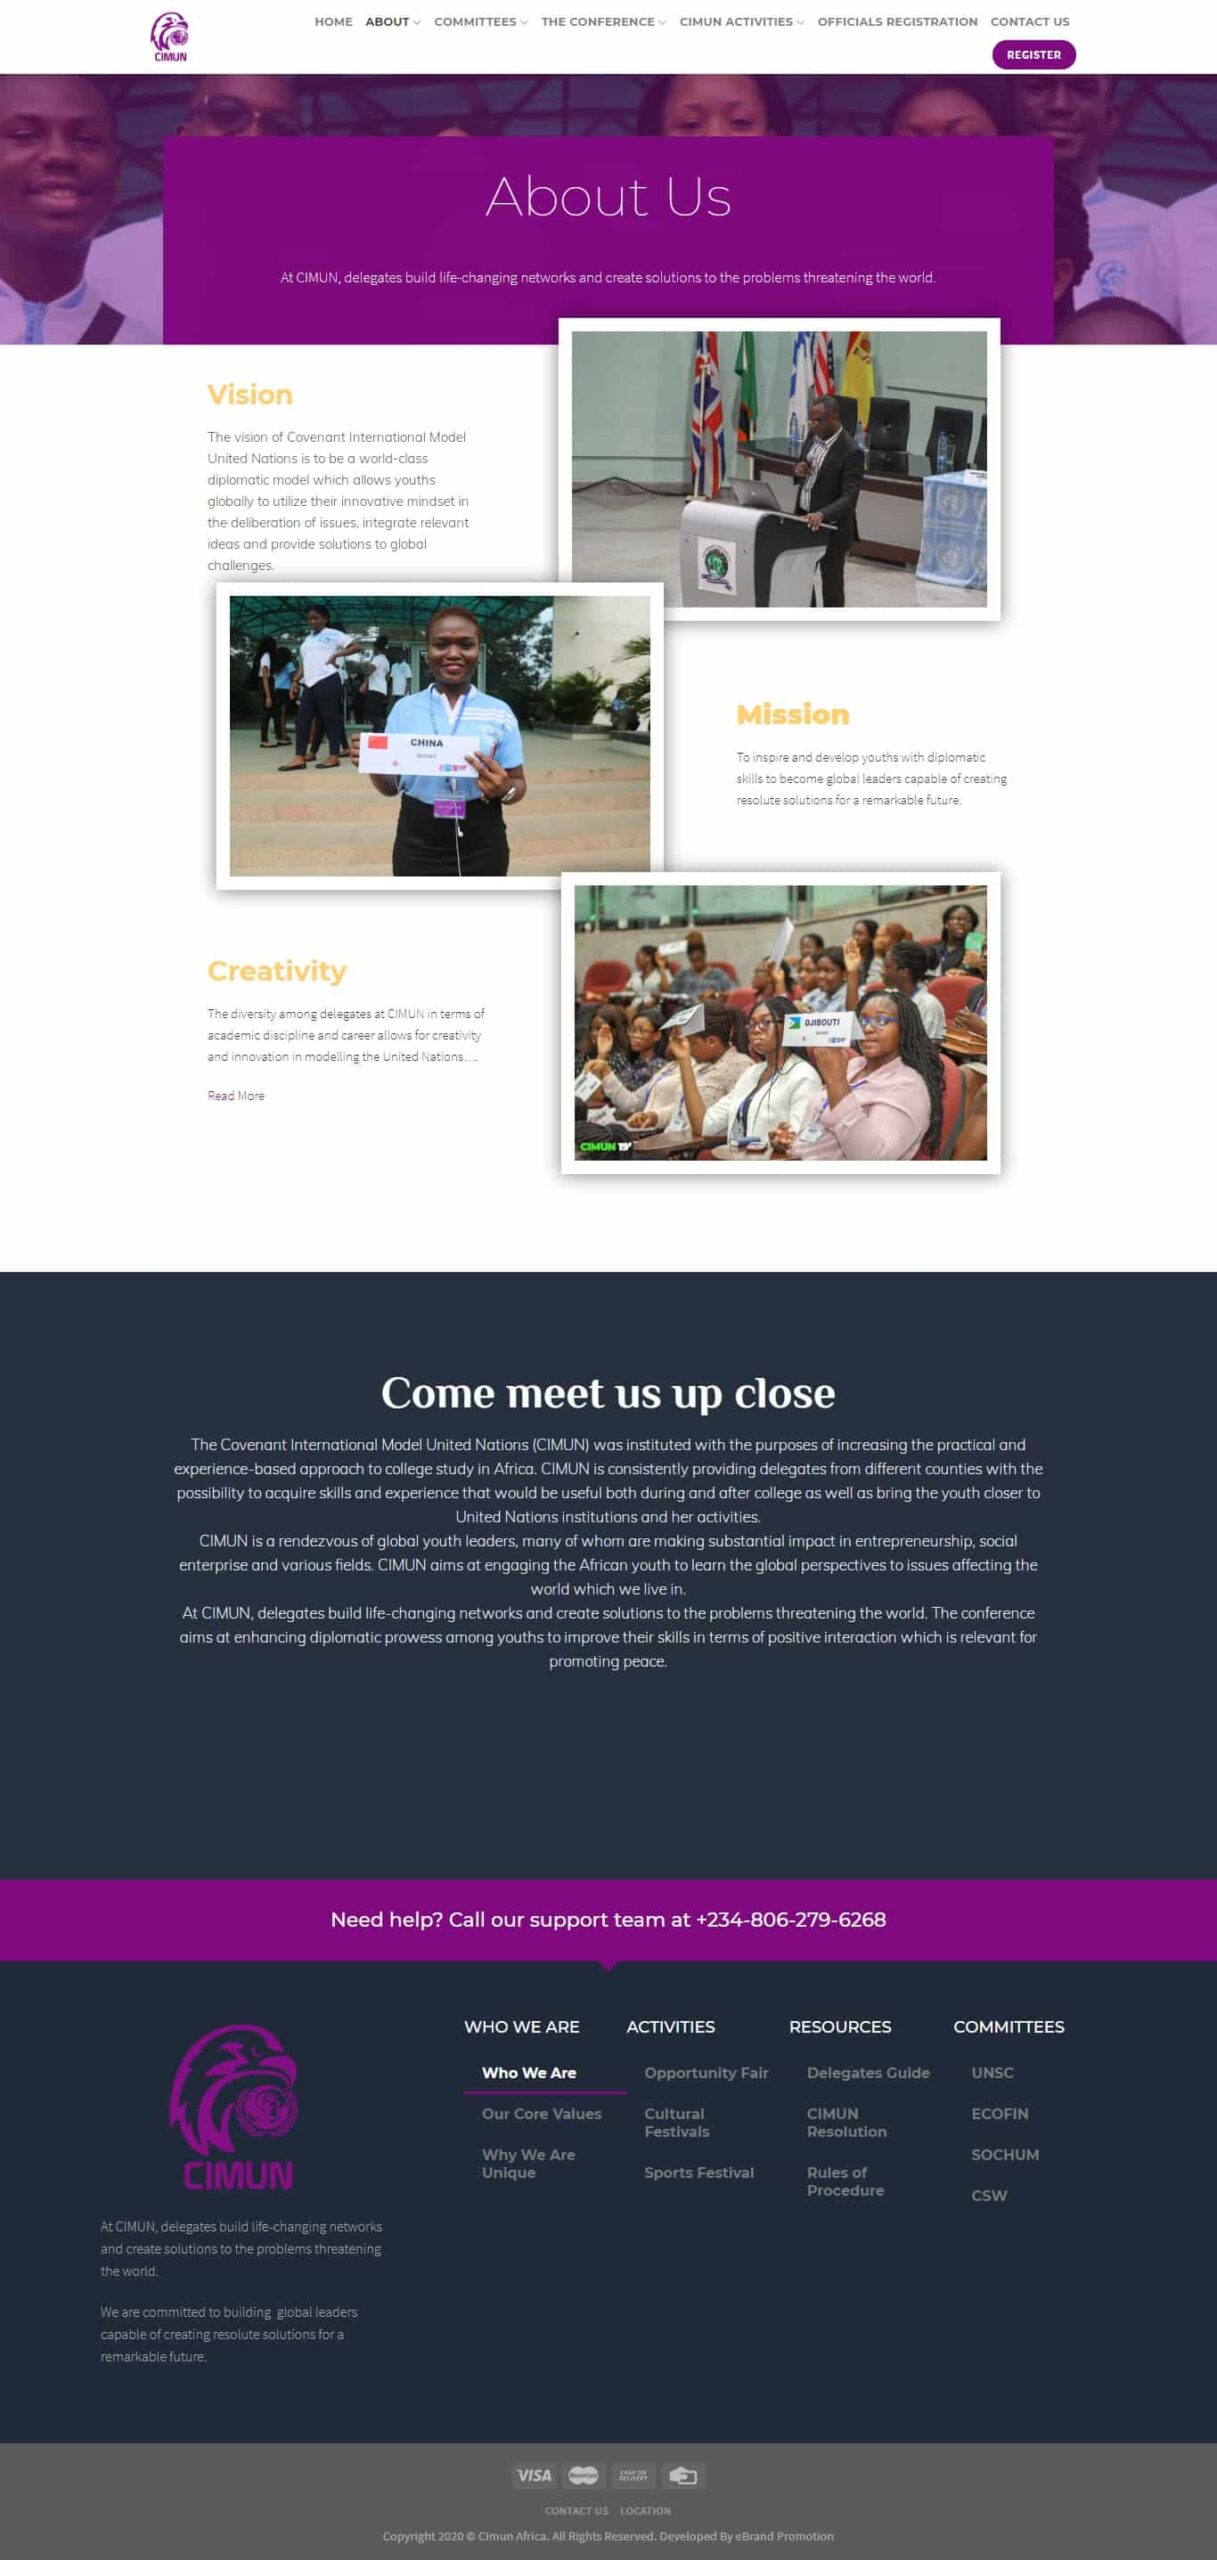 web design nigeria CIMUN